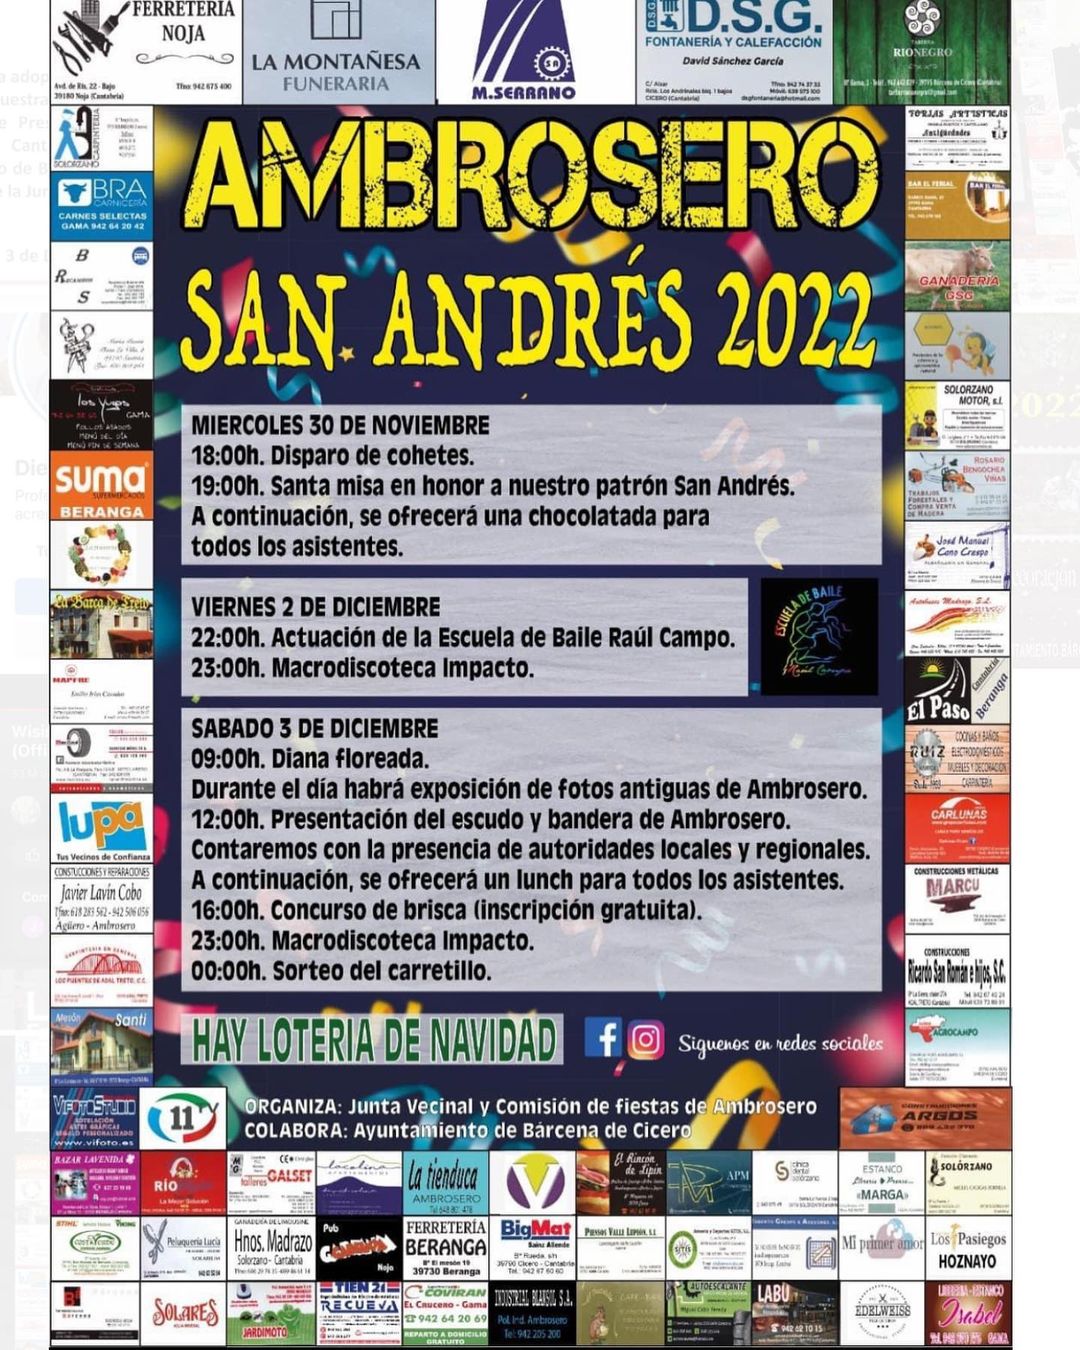 San Andrés 2022 – Ambrosero